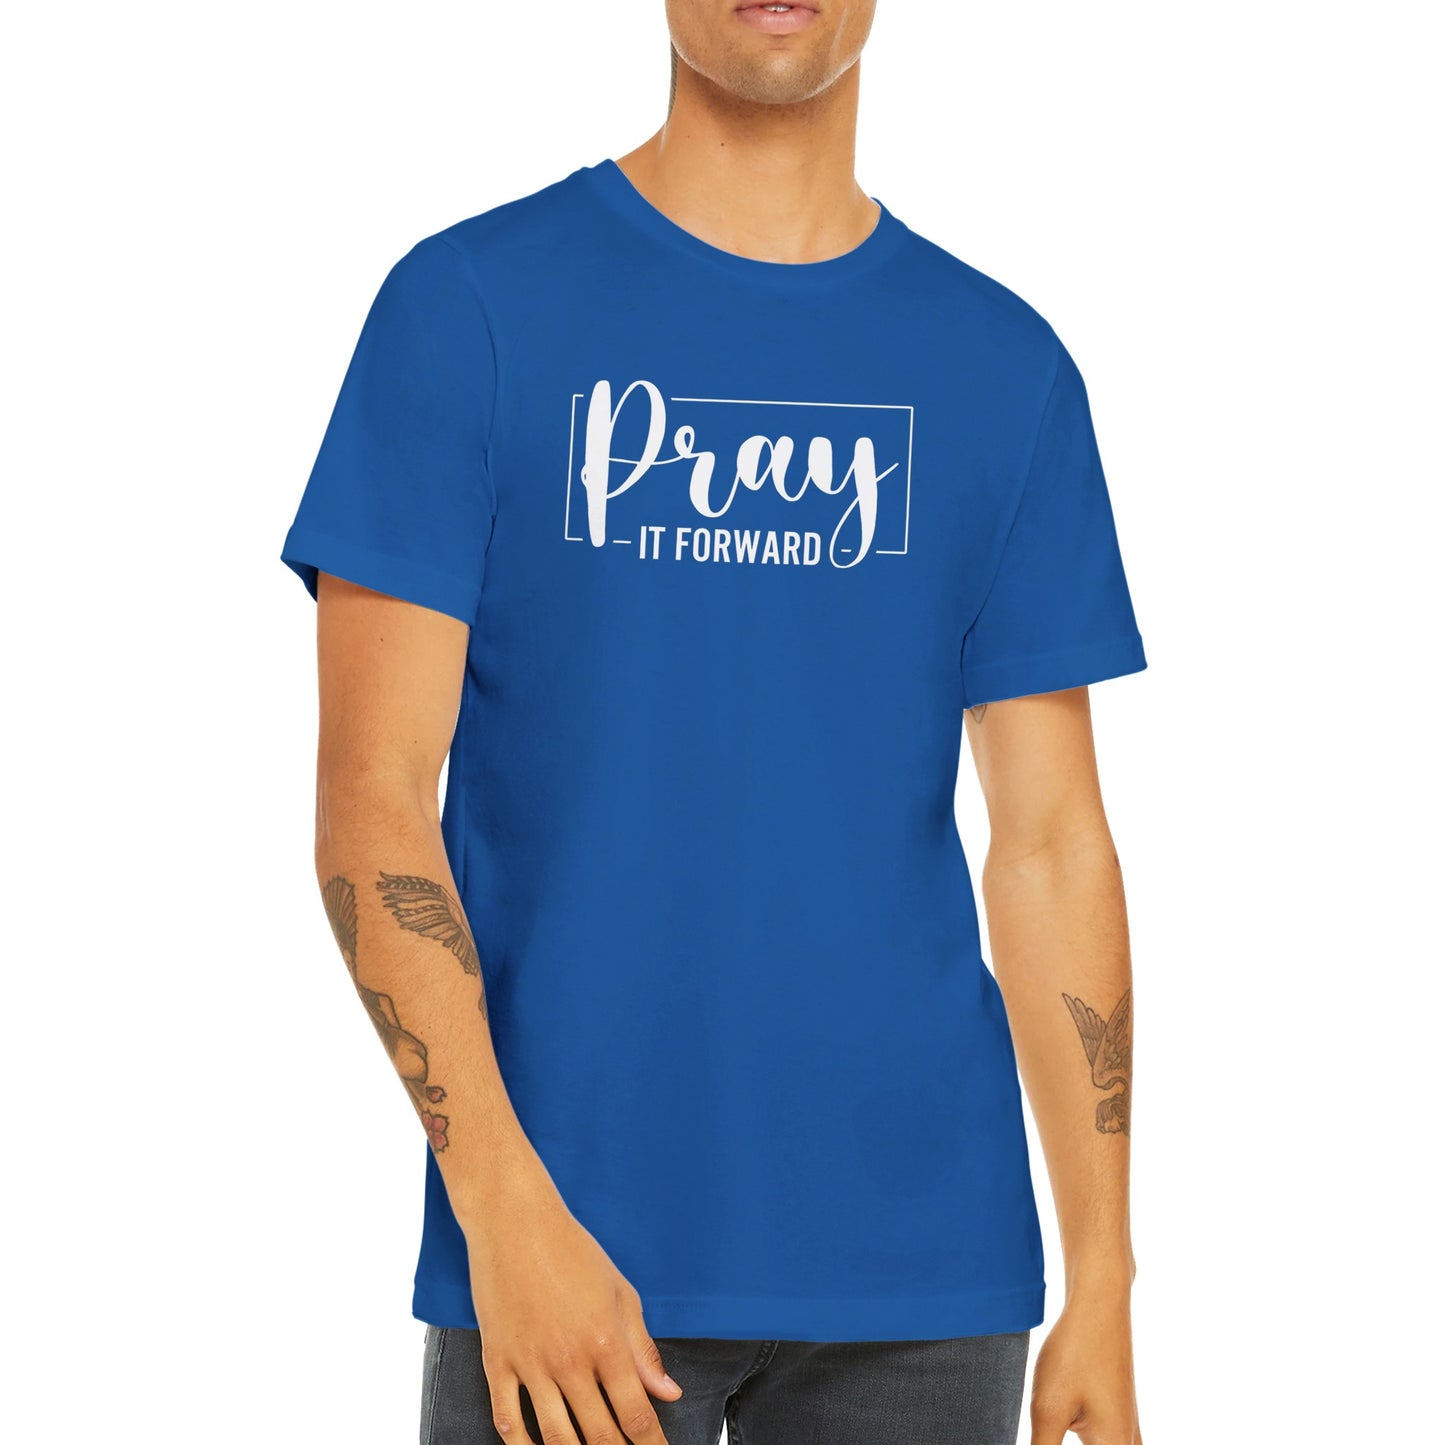 "Pray It Forward" - Premium Cotton Christian T-Shirt